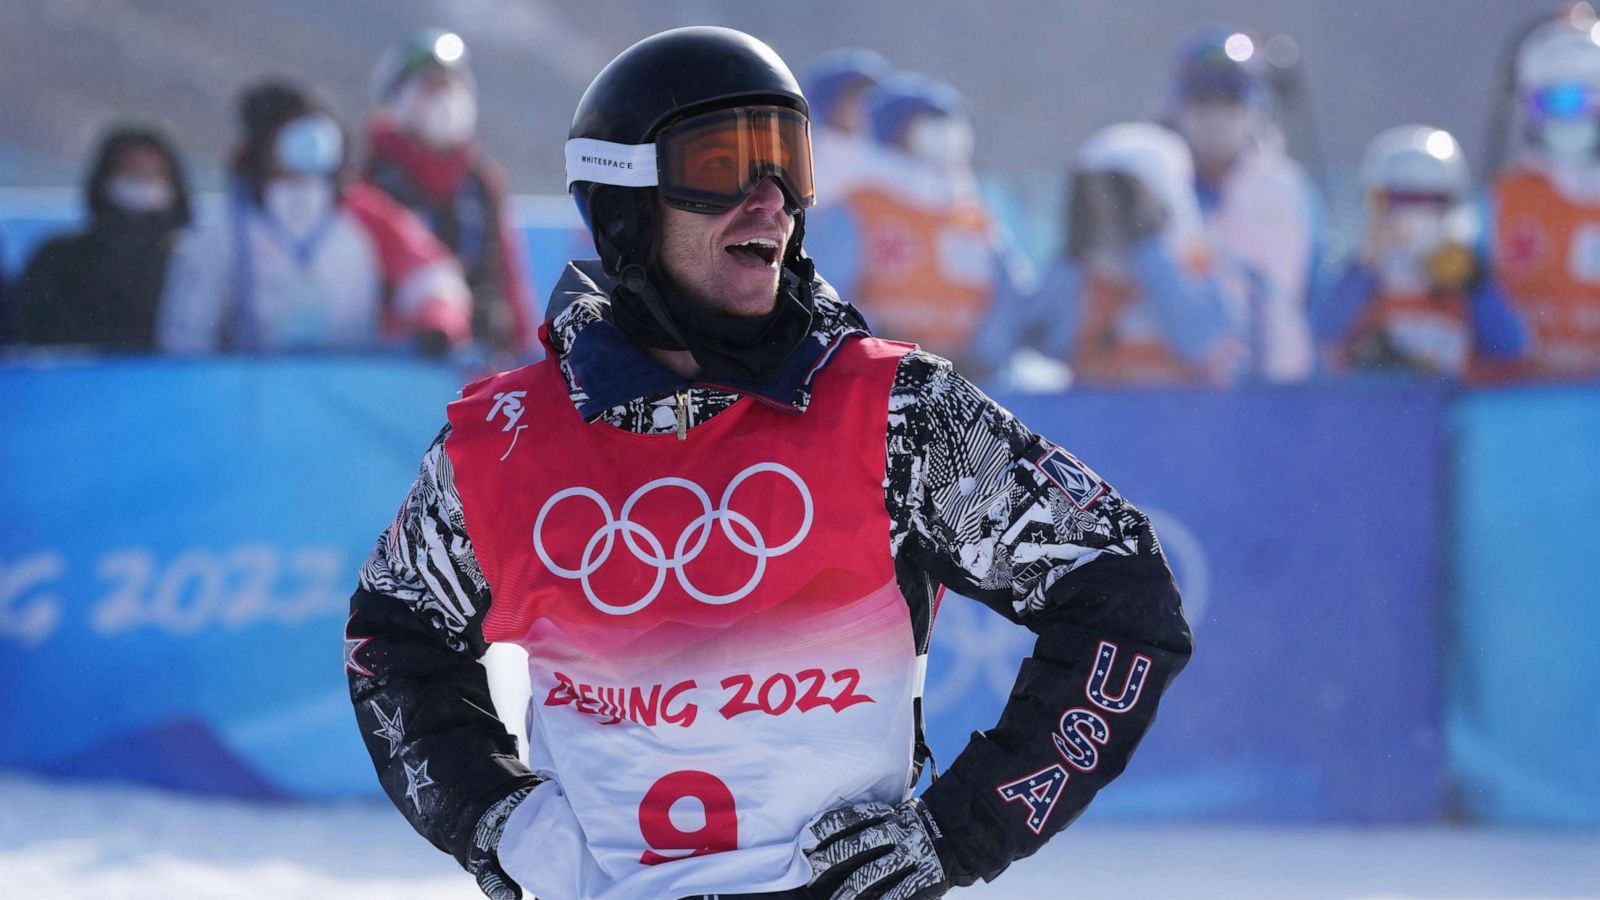 Shaun White wins gold in snowboard halfpipe at 2006 Winter